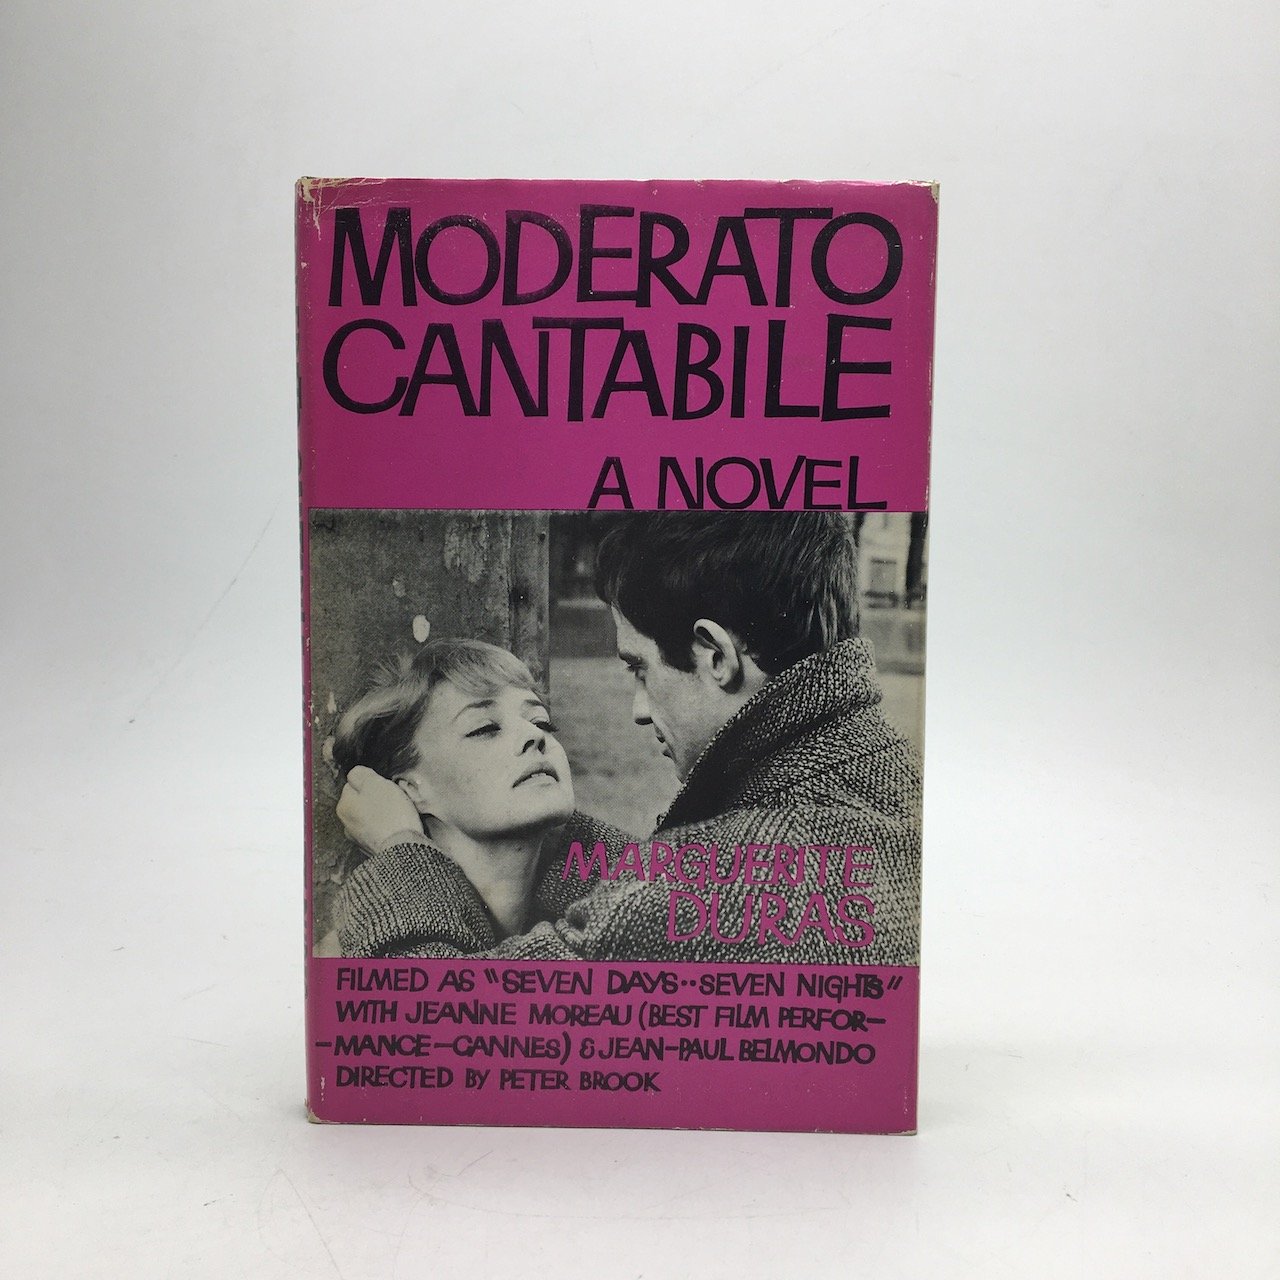 MODERATO CANTABILE - DURAS, Marguerite, Richard Seaver [Trans.]